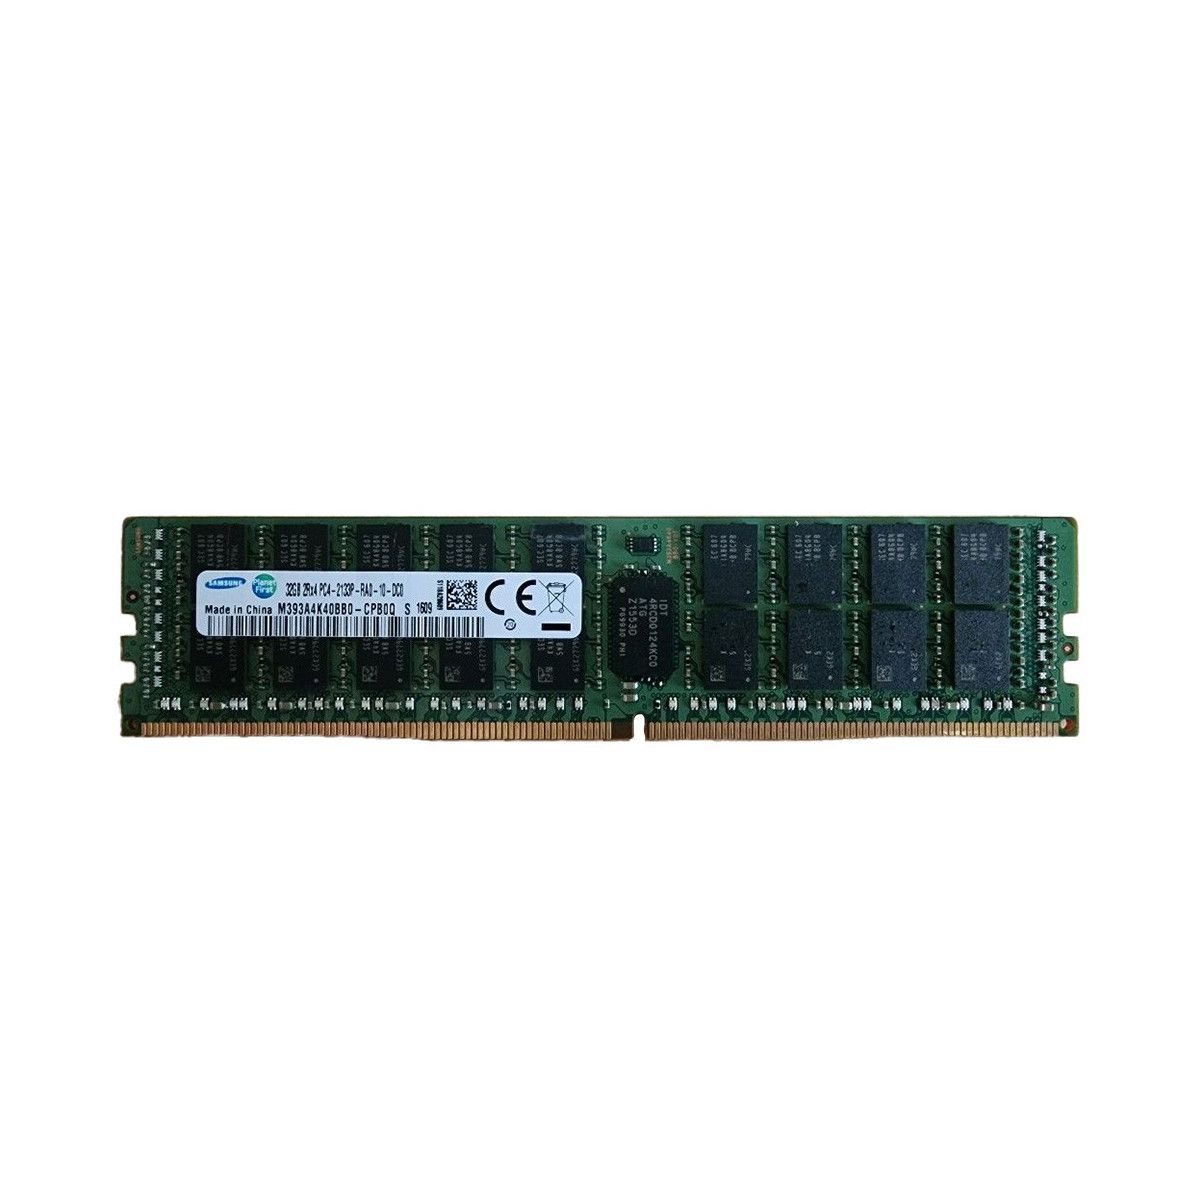 728629-B21-MS - Memstar 1x 32GB DDR4-2133 RDIMM PC4-17000P-R - Mem-Star Compatible OEM Mémoire 1 - Memstar 